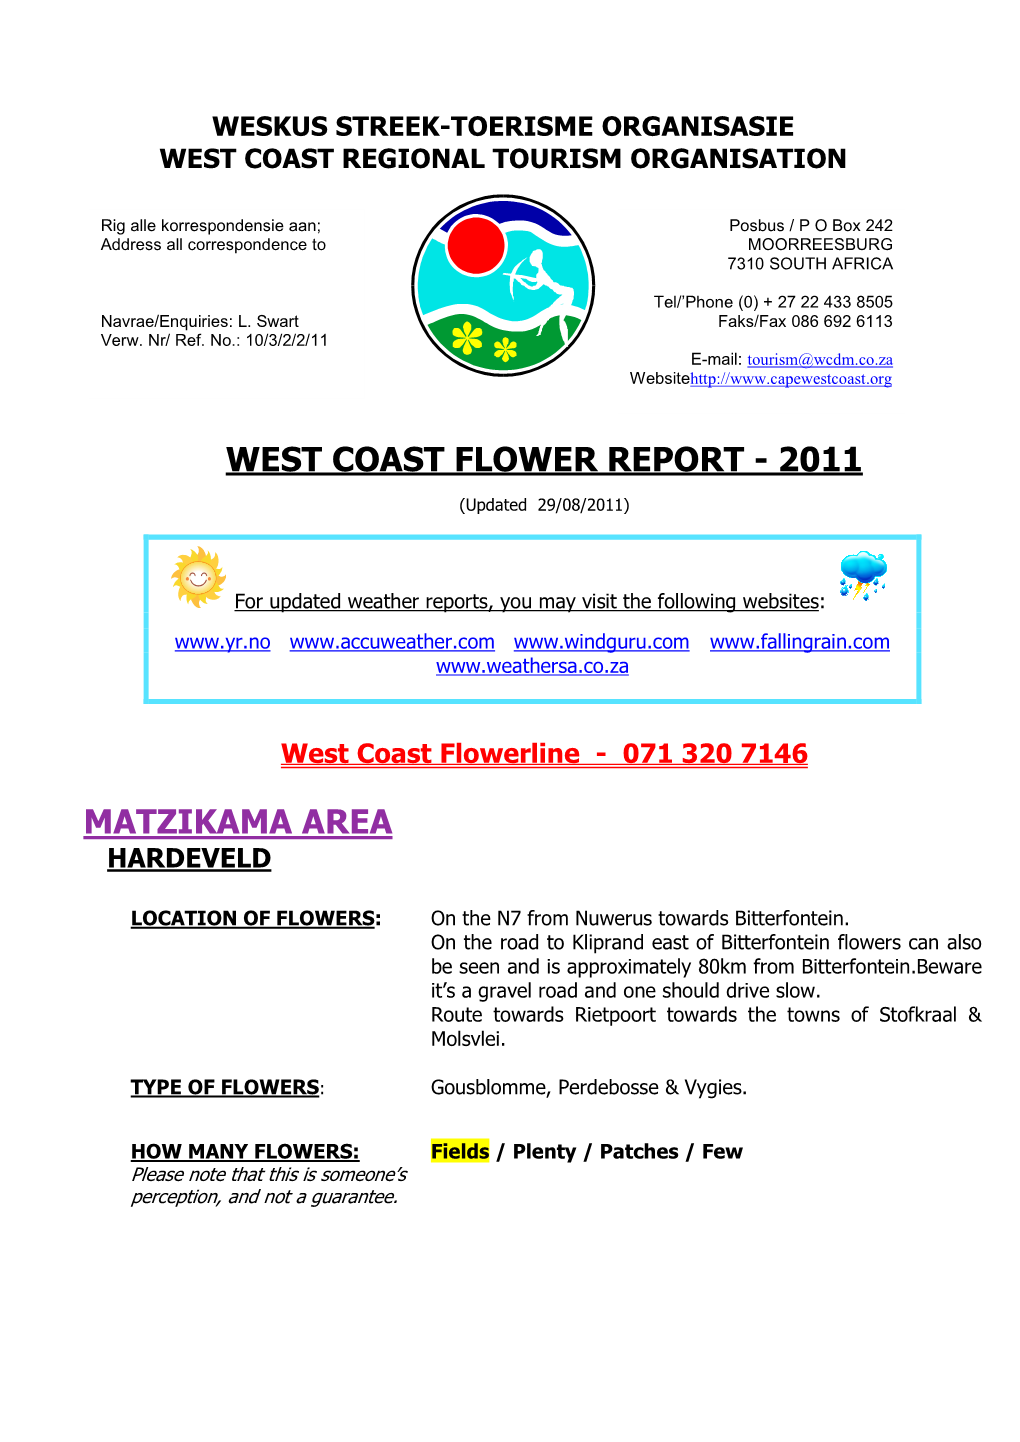 West Coast Flower Report - 2011